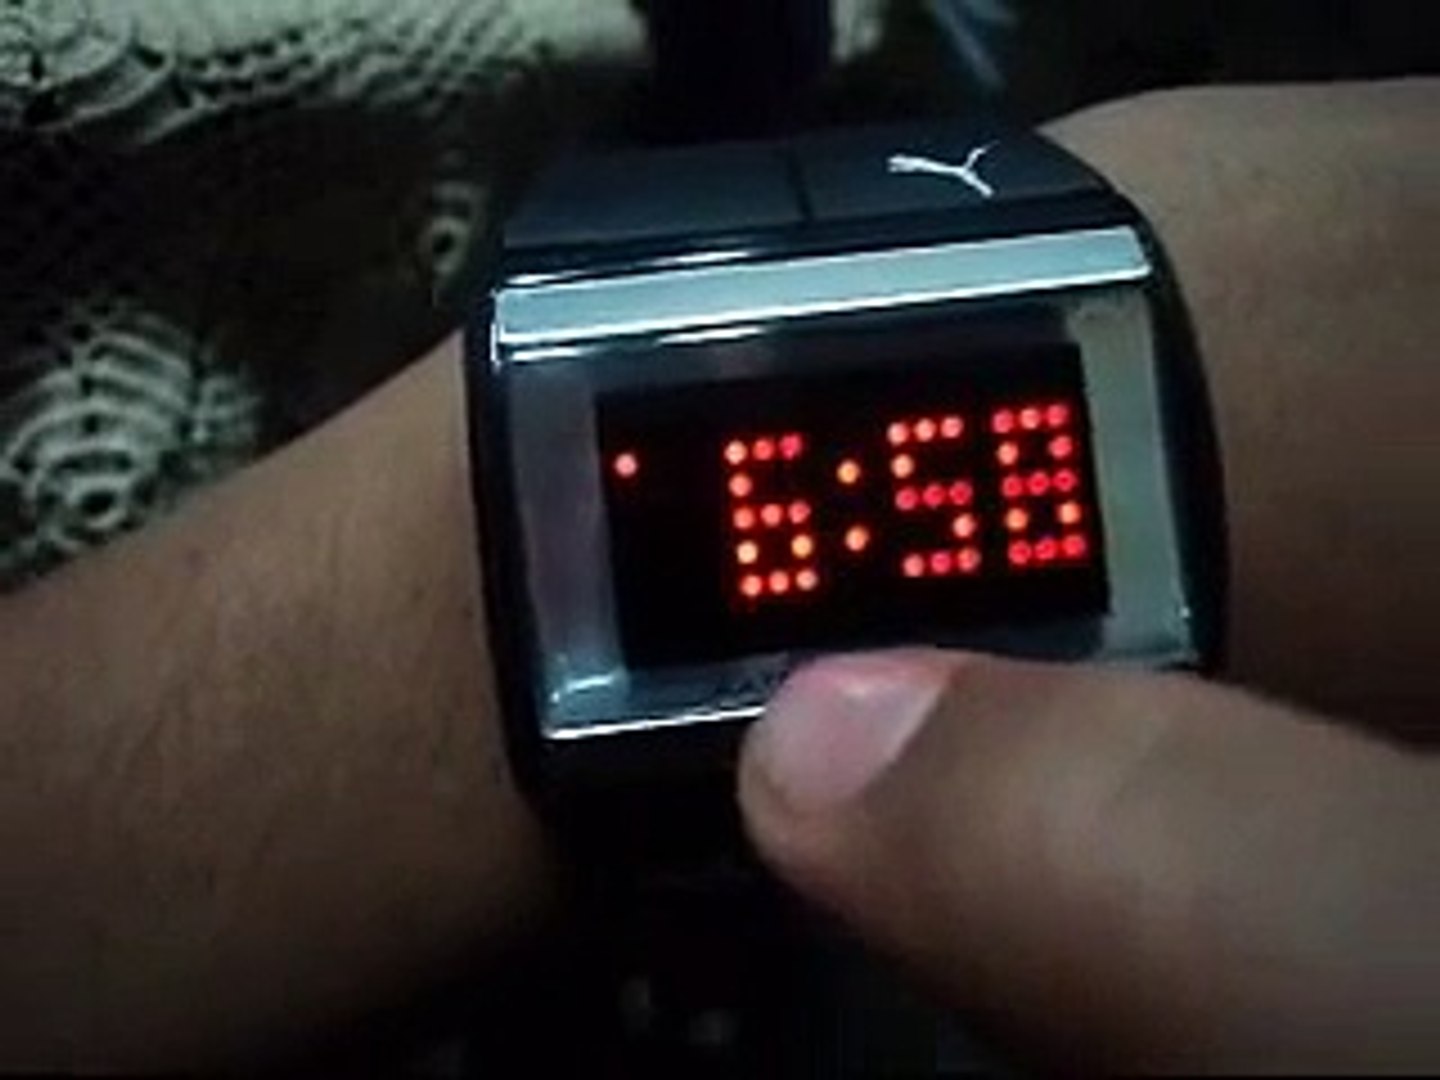 Ruina Punto de referencia triatlón Como cambiar hora y fecha Reloj touch screen - video Dailymotion